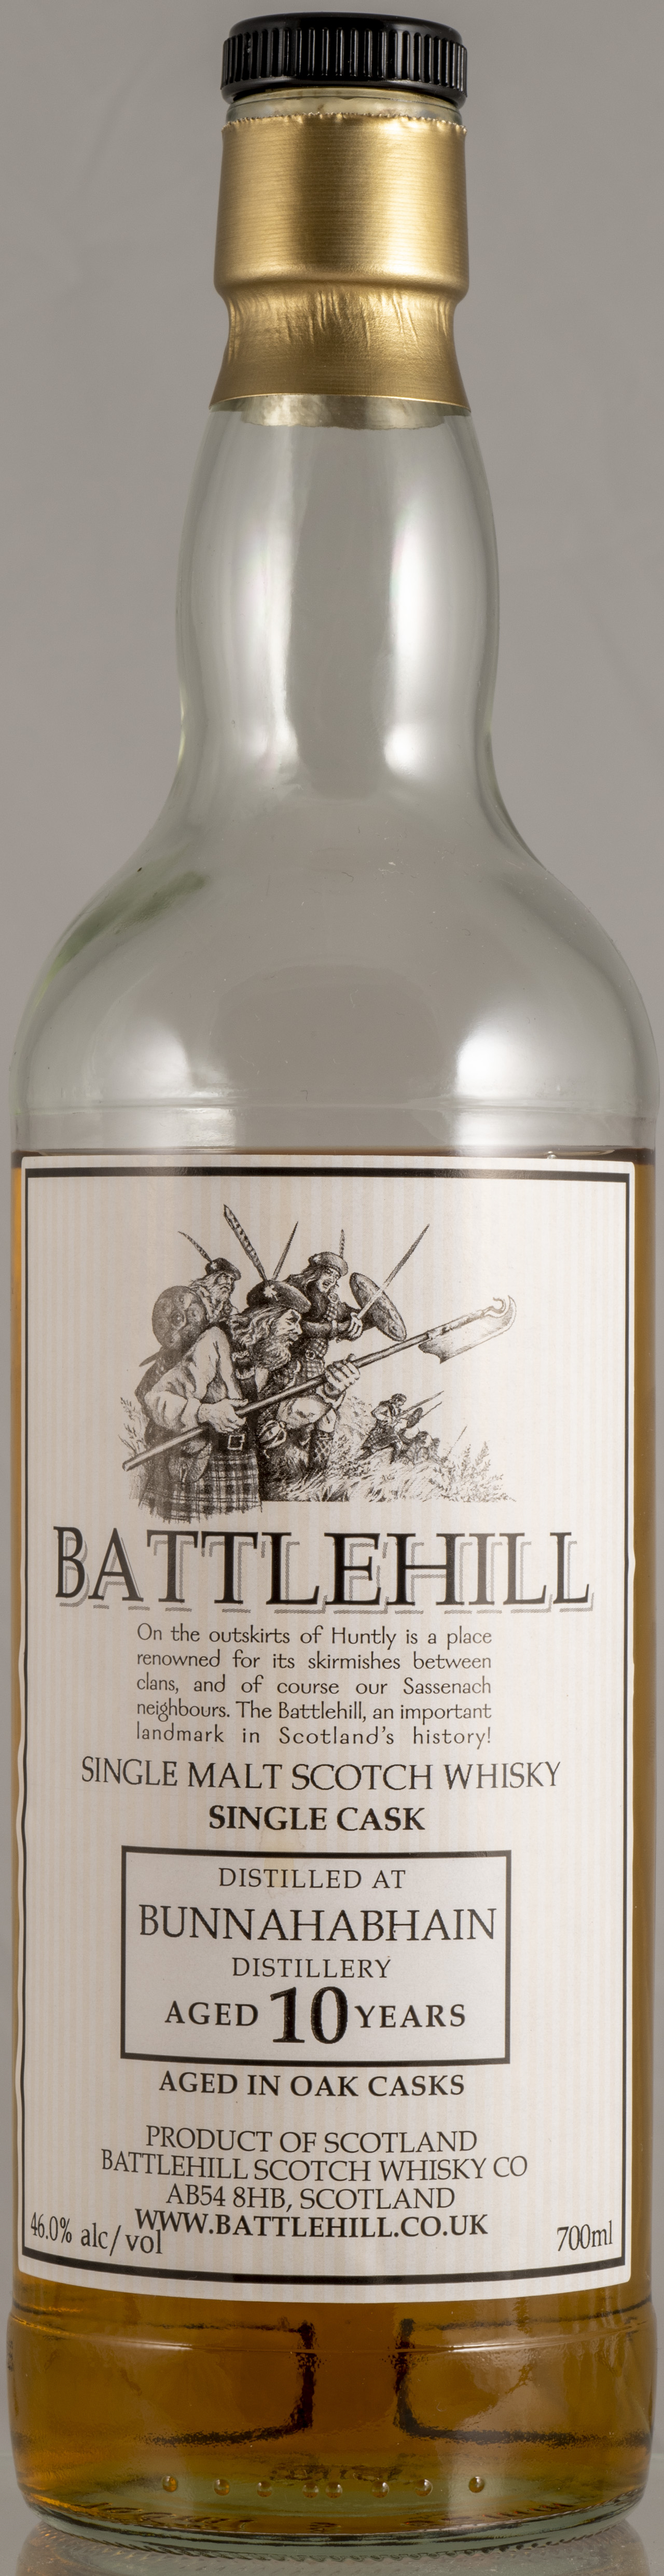 Billede: PHC_6072 - Battlehill Bunnahabhain - bottle front.jpg